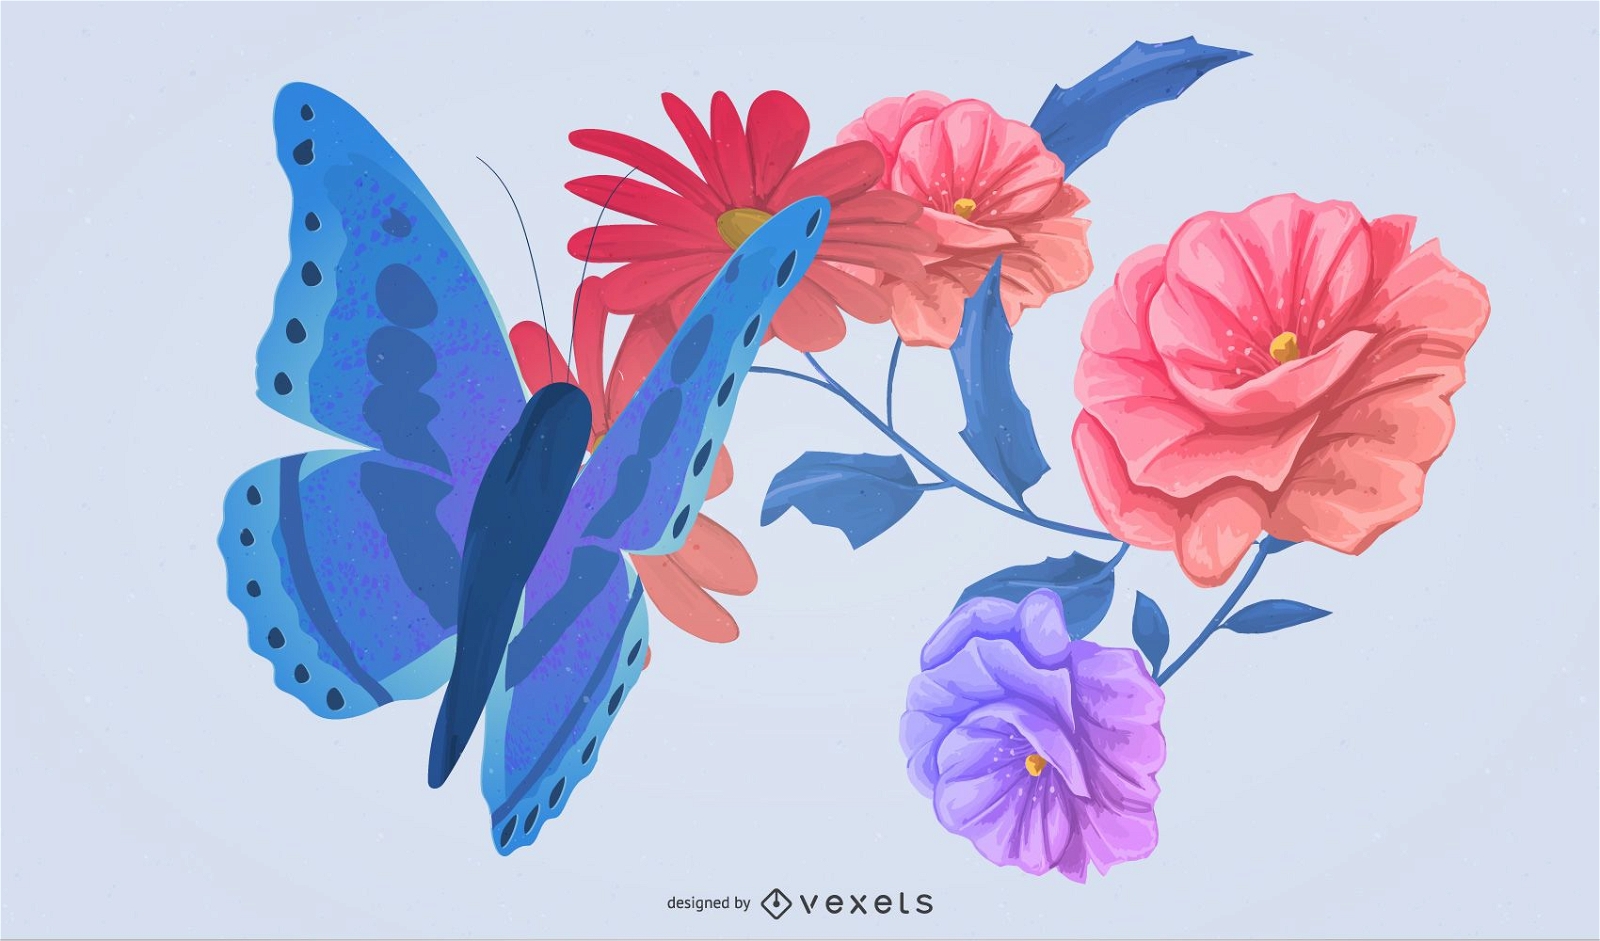 borboletas e flores ilustra??o design